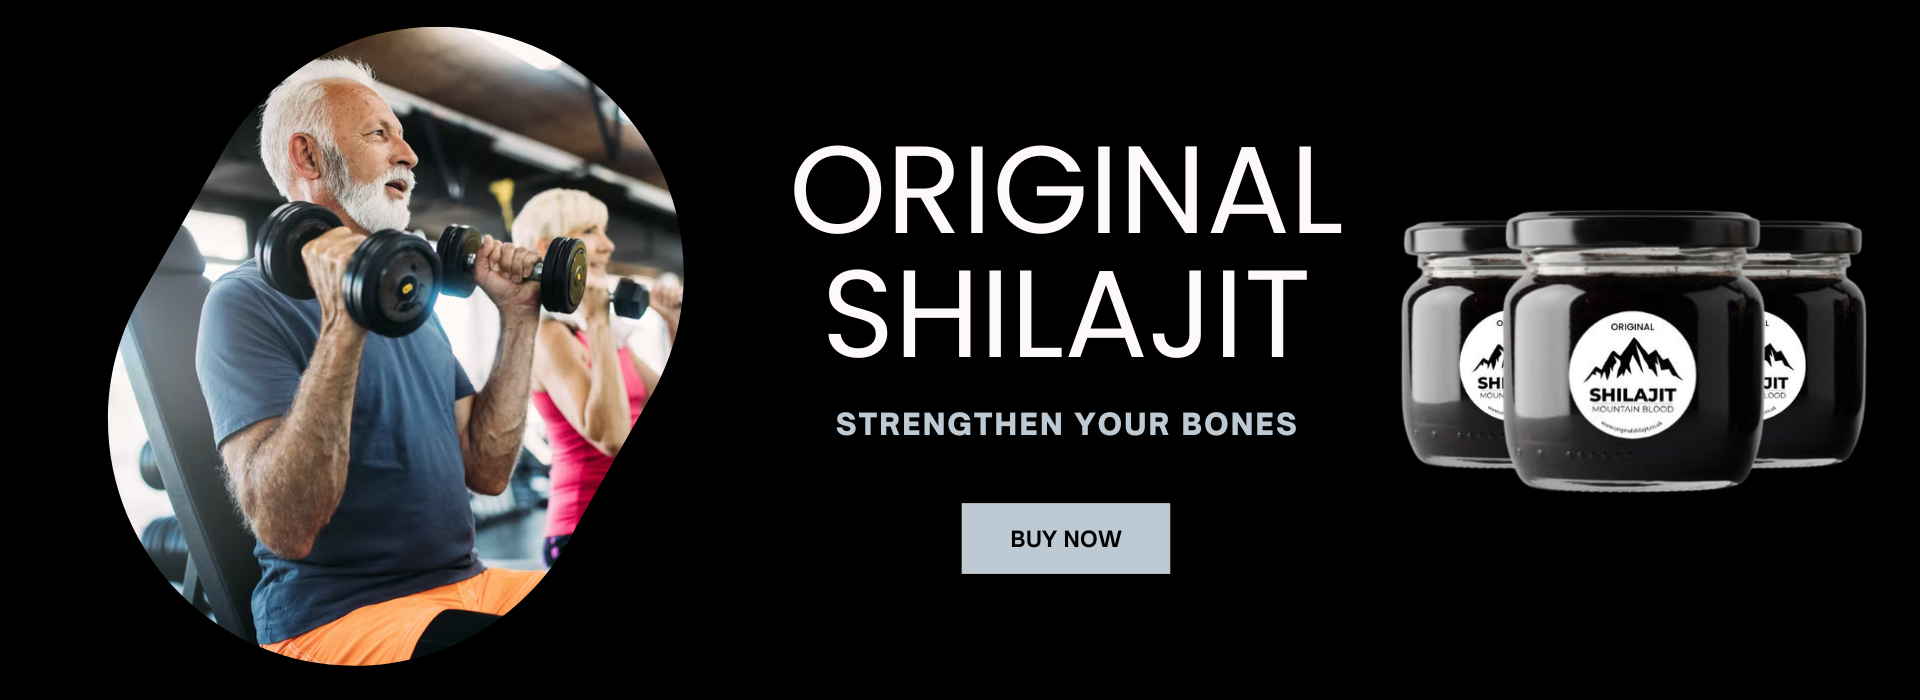 Original Shilajit Strengthen your bones